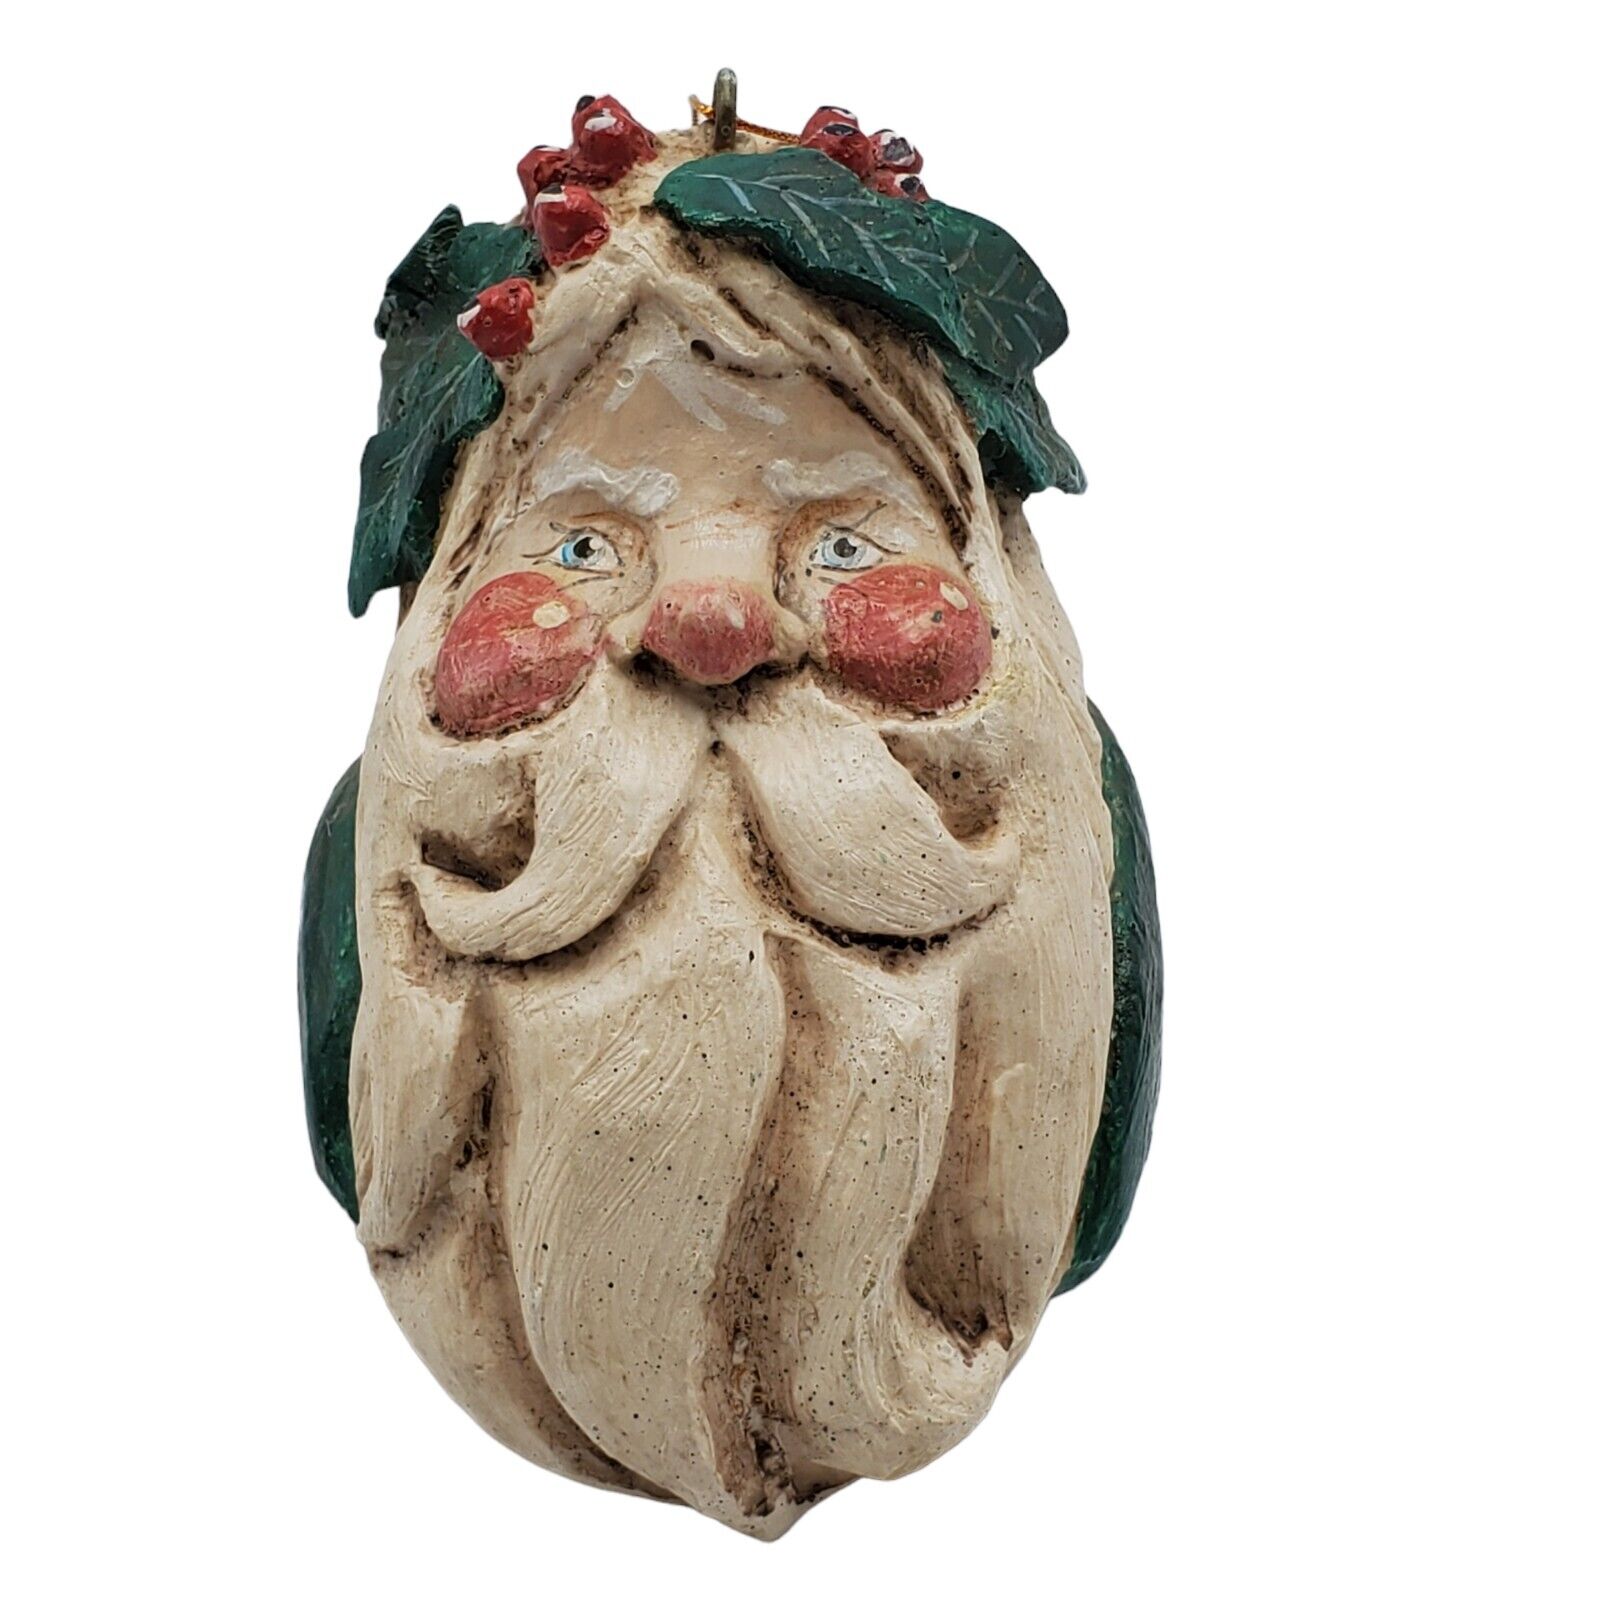 VTG 1988 House Of Hatten Santa Ornament Green Holly Christmas Sitter Rosy Cheeks